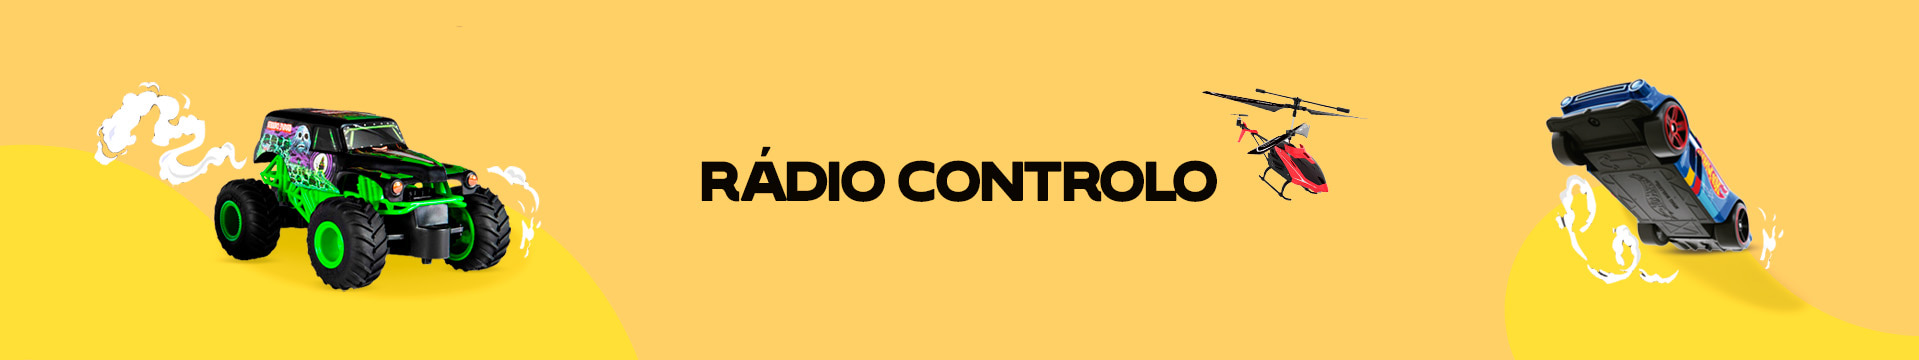 Rádio Controlo